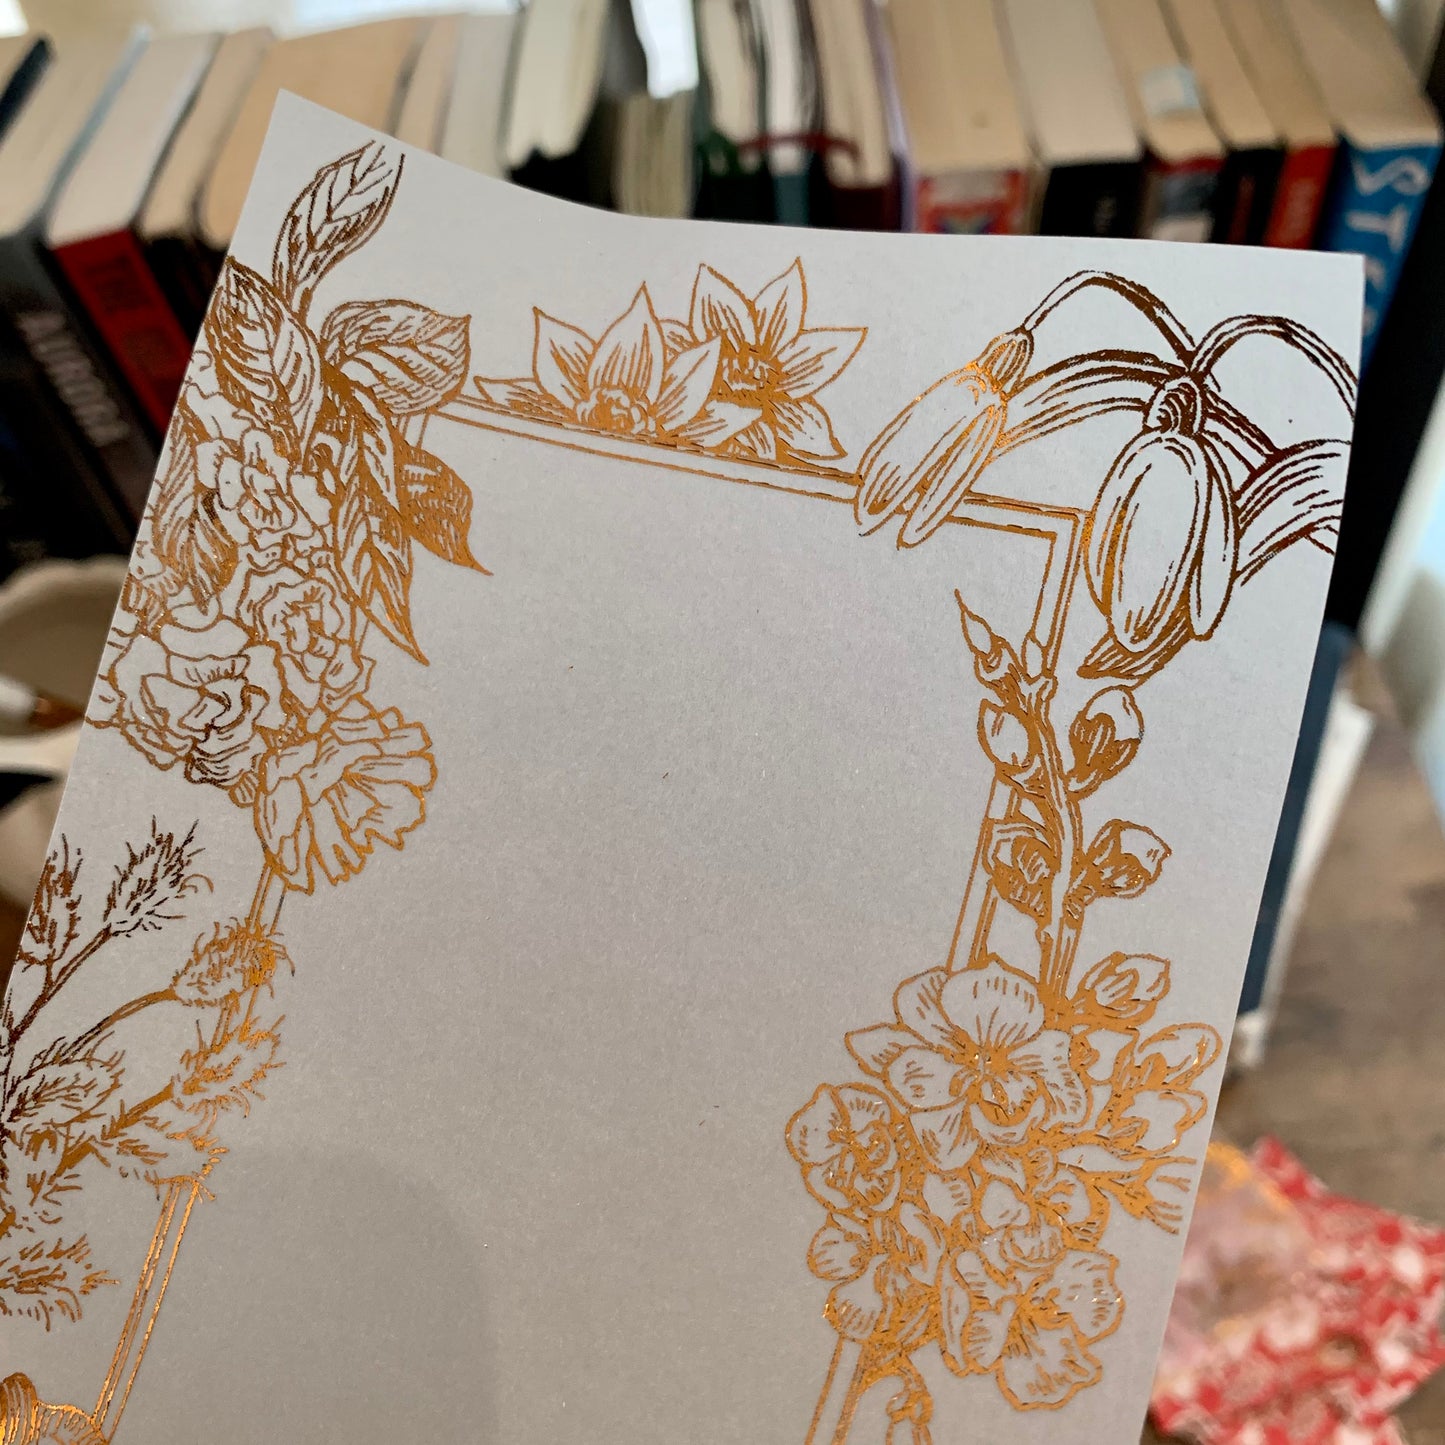 Foiled Vintage Floral Frame Hand drawn Flowers - Vellum Planner Dashboard - Scrapbooking Paper